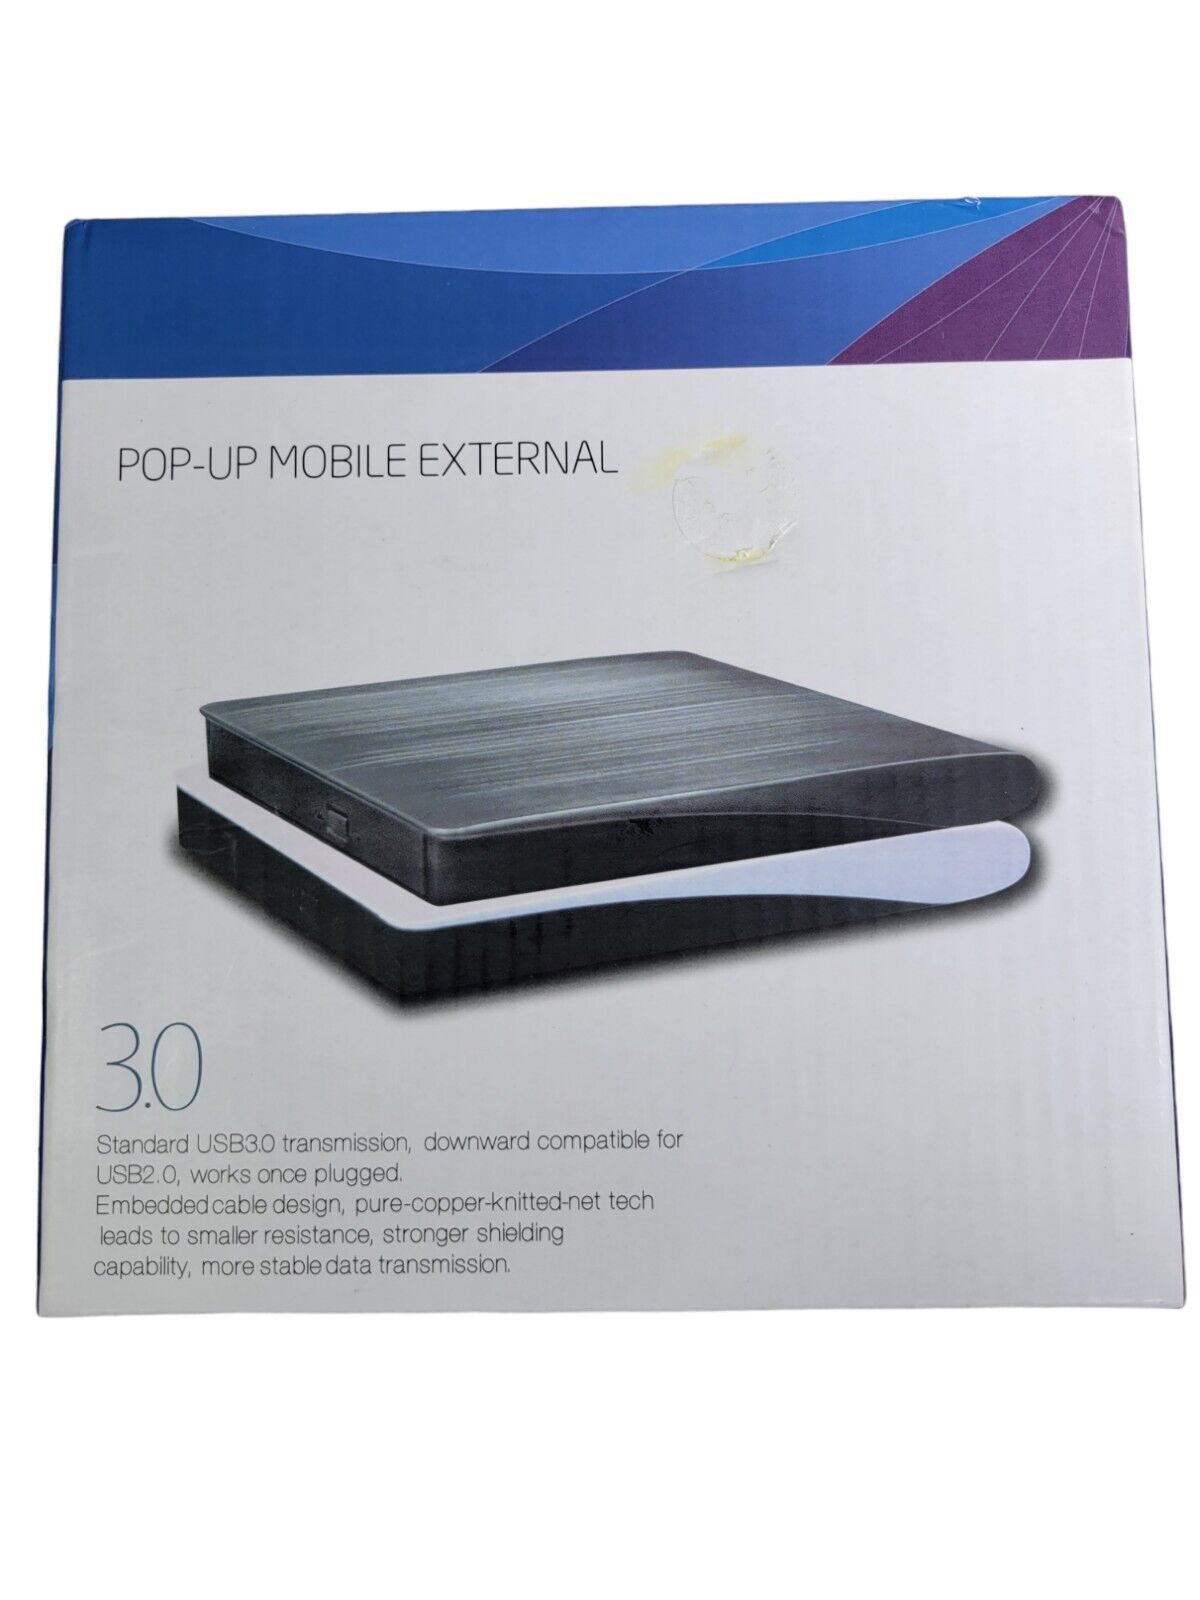 Pop-up Mobile External USB 3.0 Portable DVD-RW Drive CB-31005 NIB